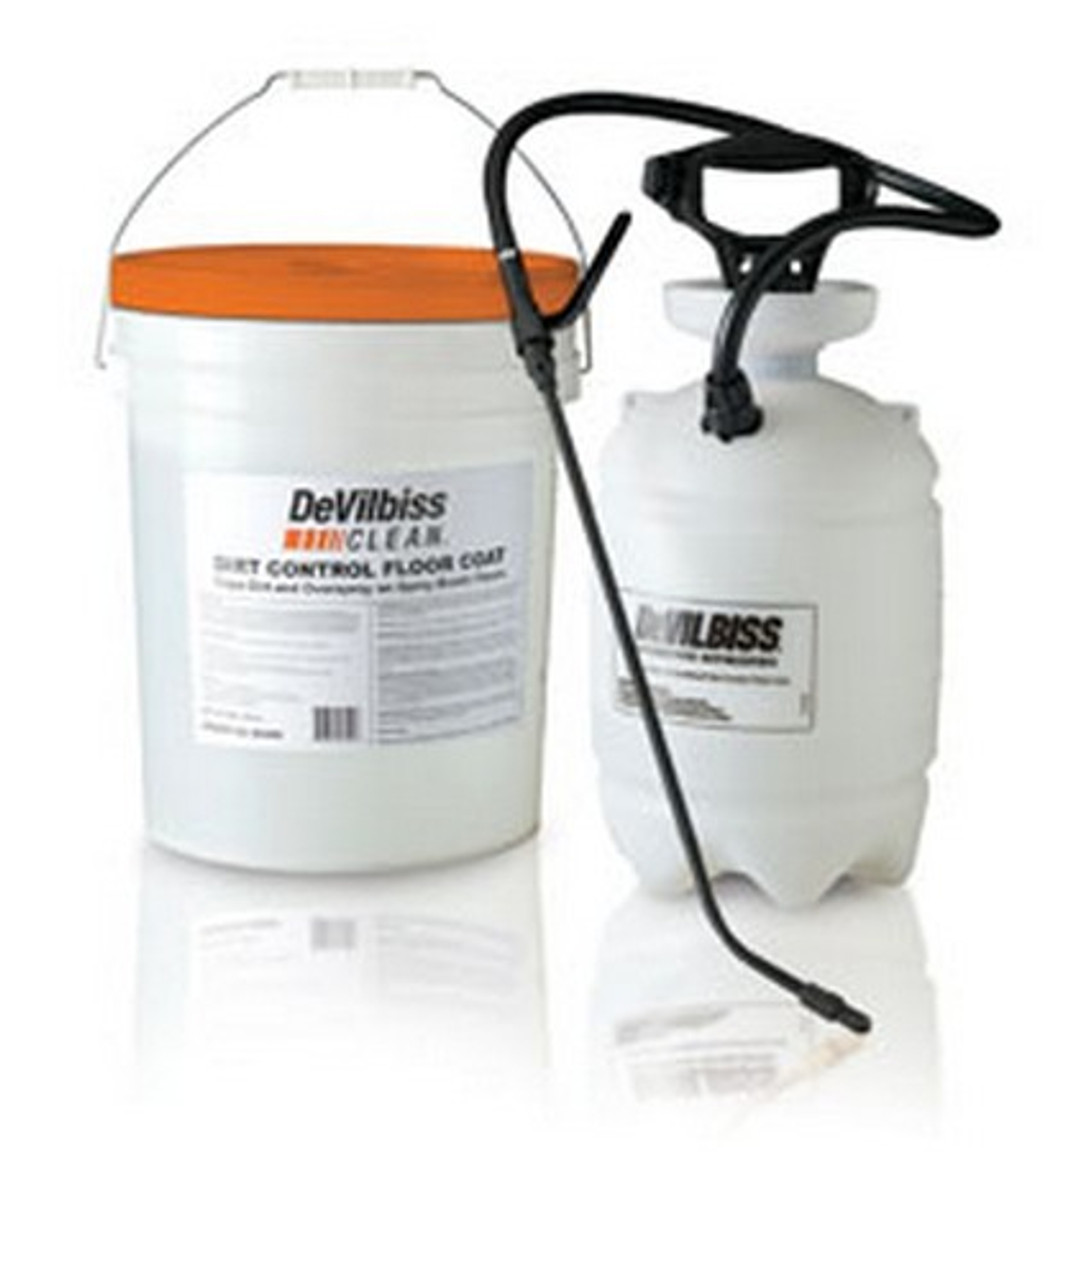 Chemical Guys ACC503 Atomizer/Pump Sprayer Mr. Sprayer Full Function